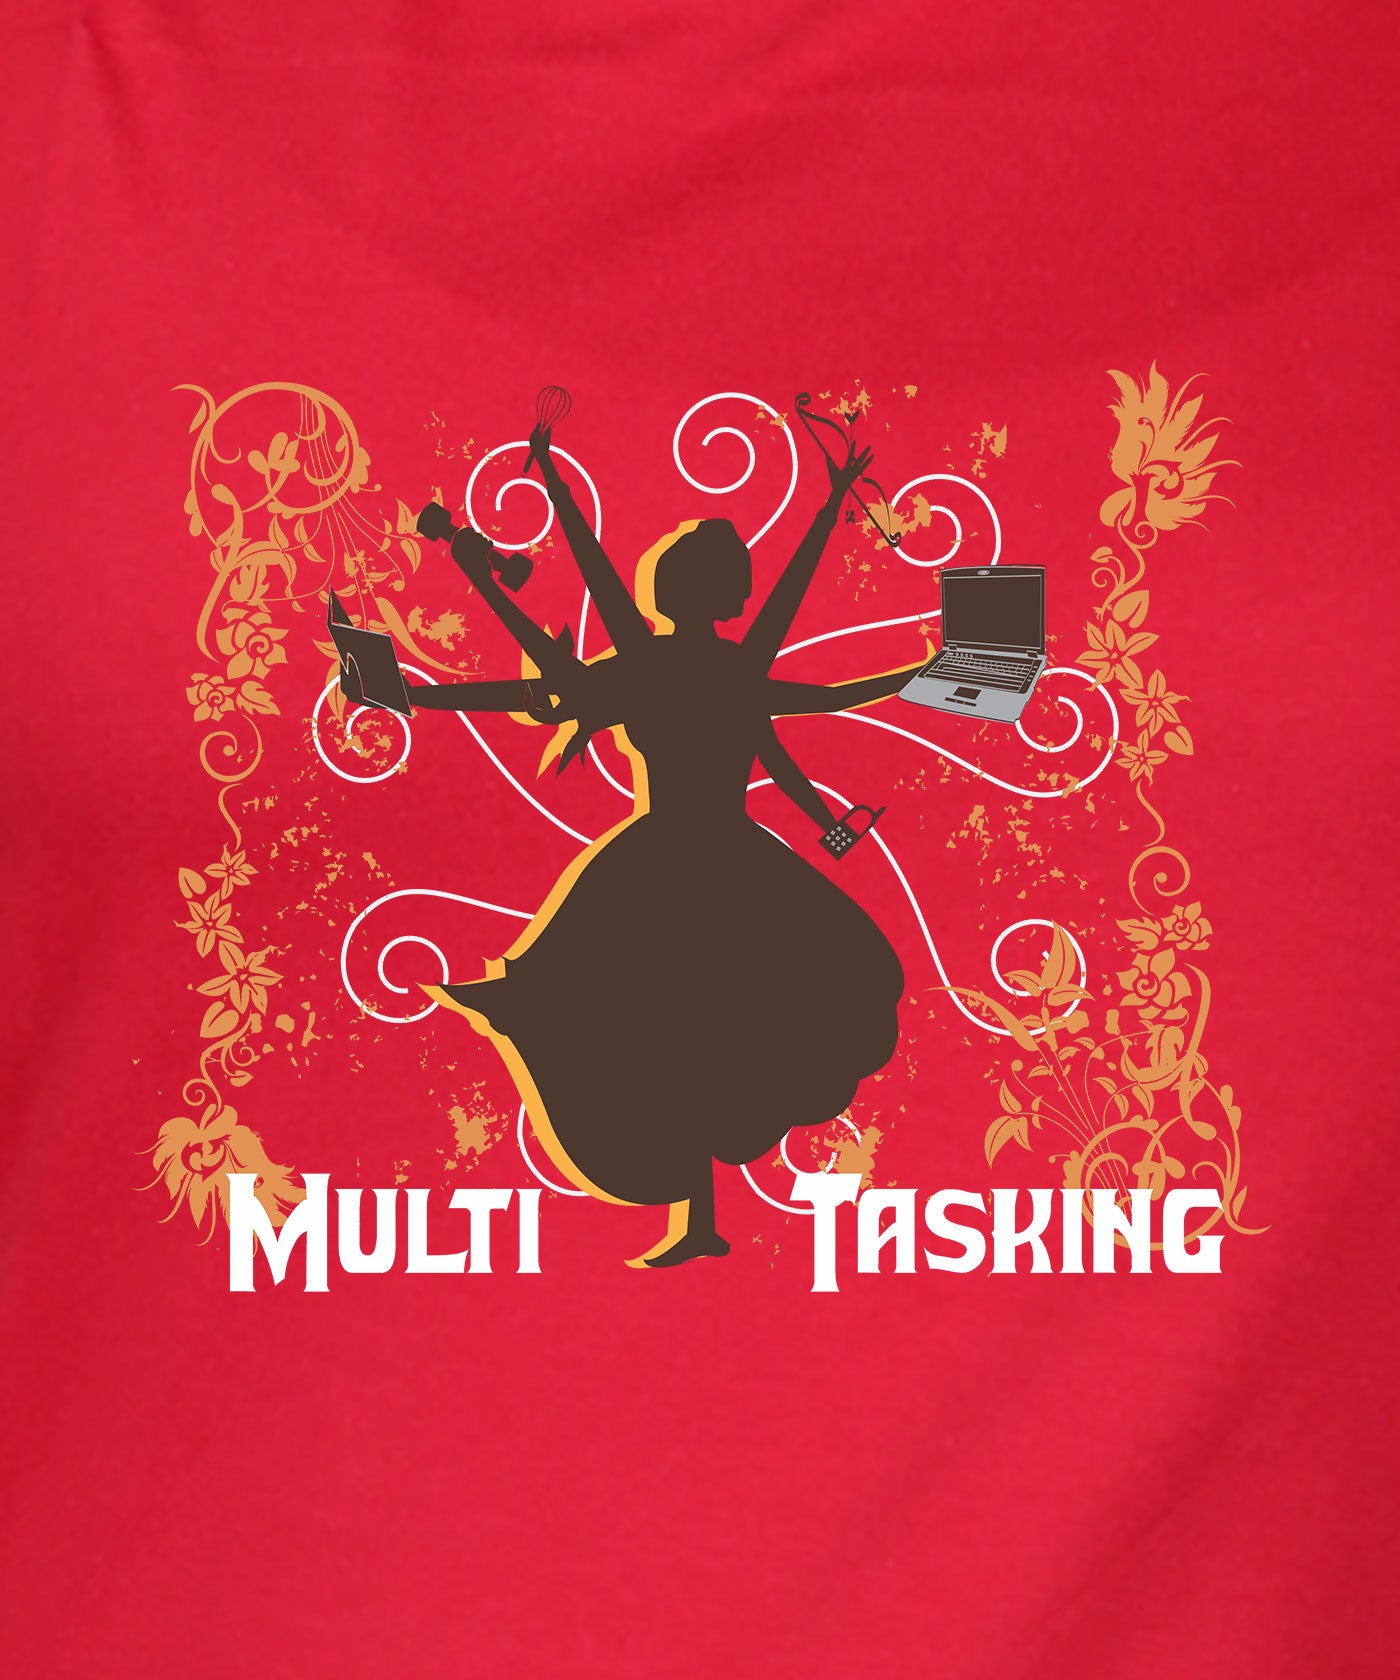 Multi Tasking - Premium Round Neck Cotton Tees for Women - Red